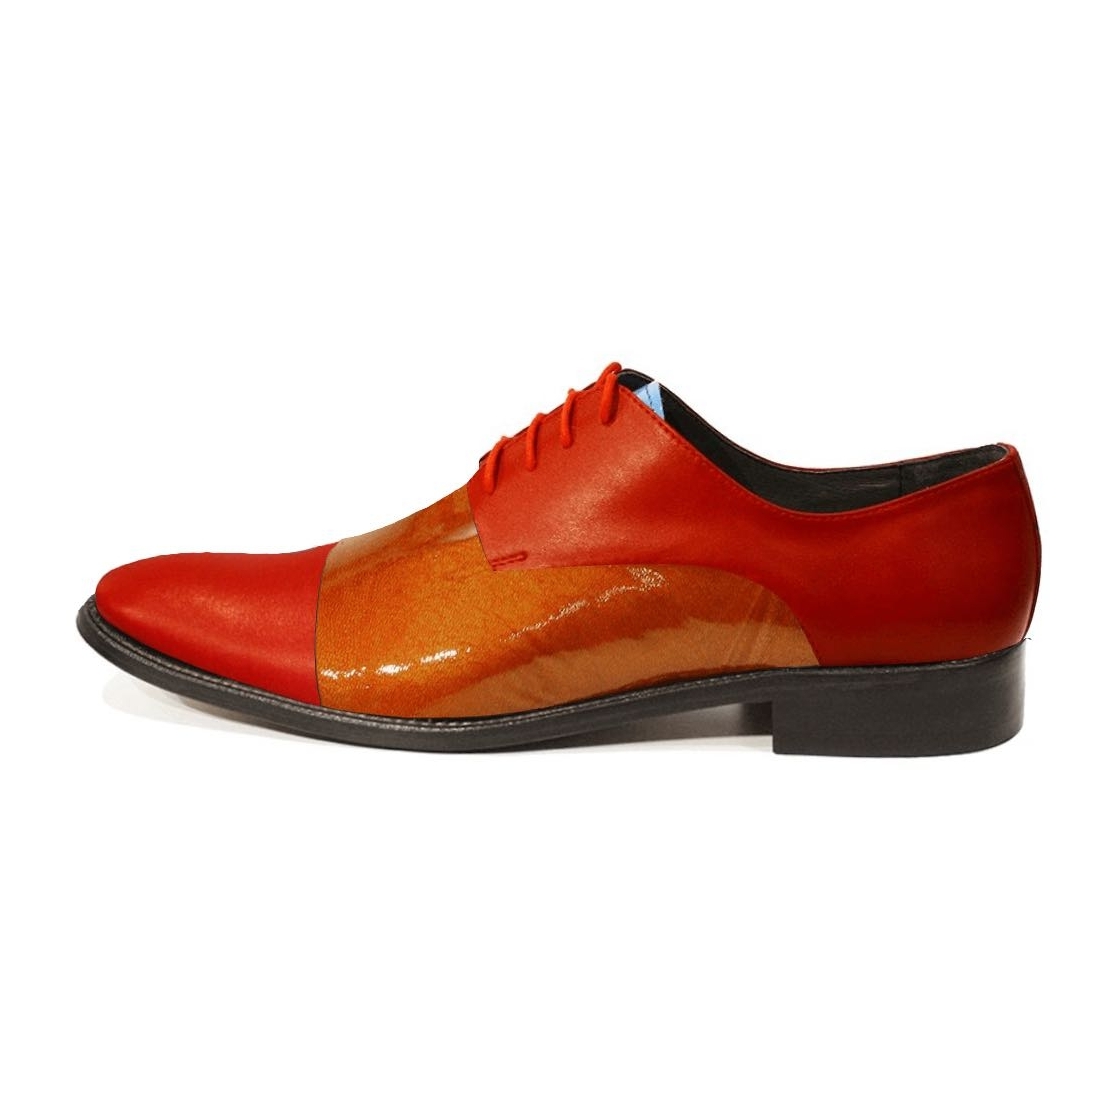 Modello Teterro - クラシックシューズ - Handmade Colorful Italian Leather Shoes